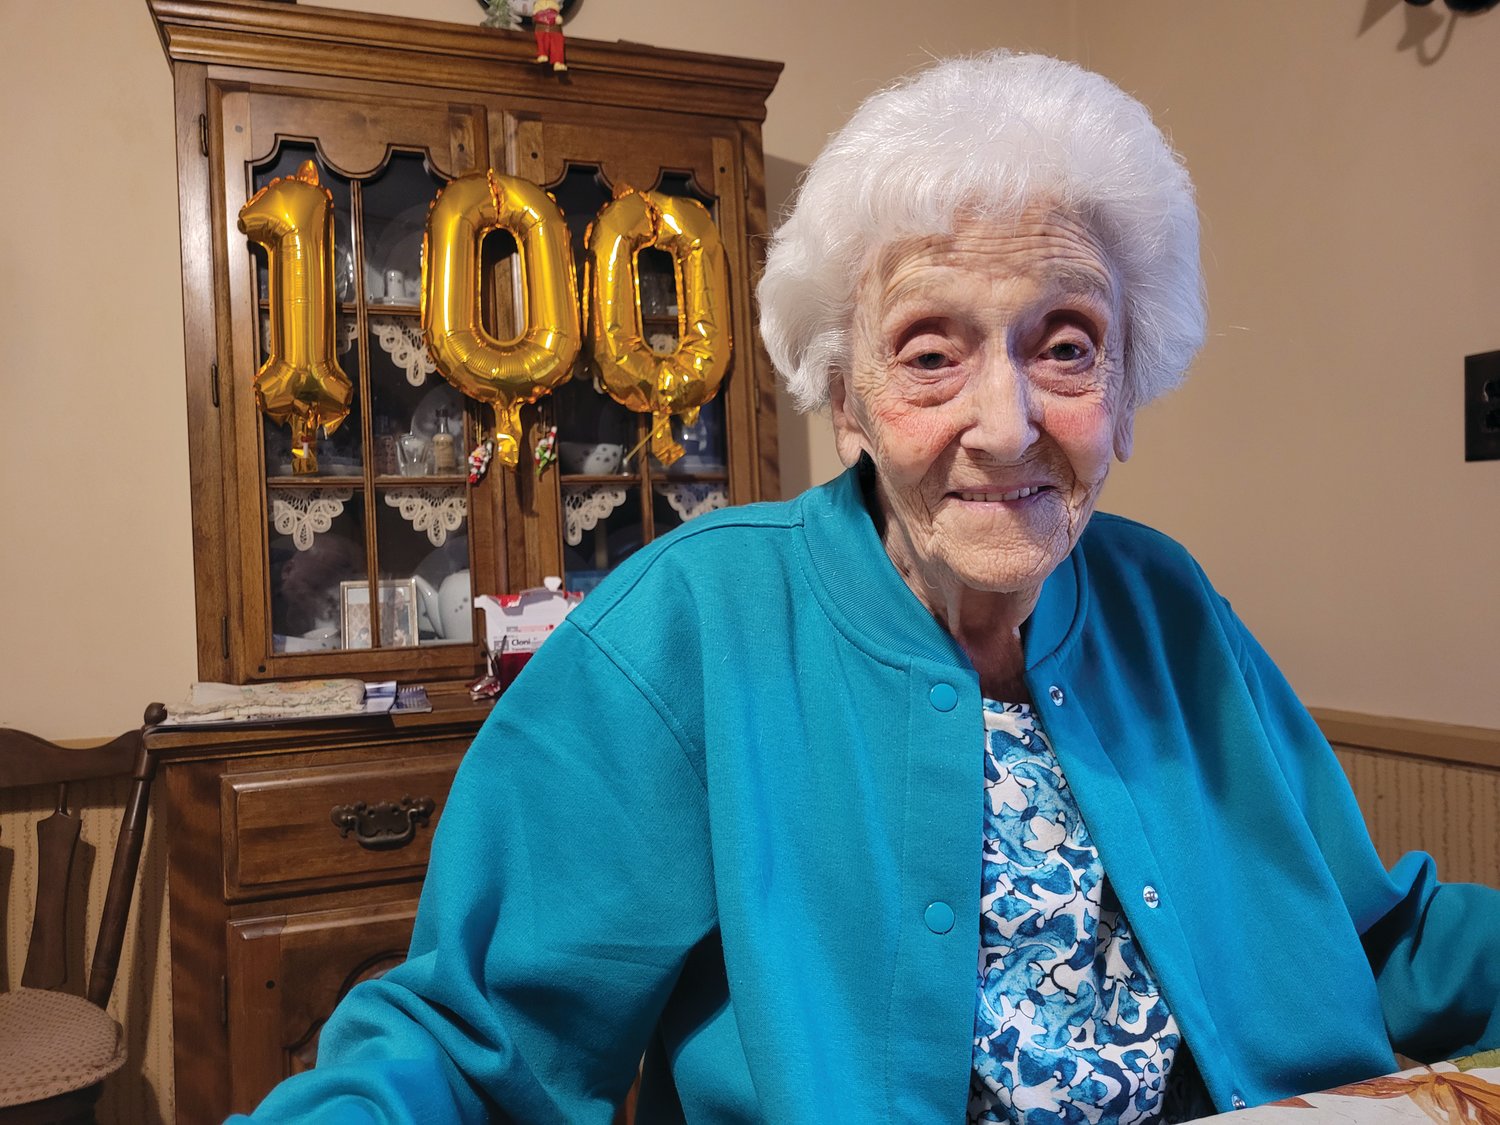 HAPPY BIRTHDAY: On Jan. 1, Josephine “Josie” Celentano turned 100 years old in the same Binghampton Avenue home where she was born.